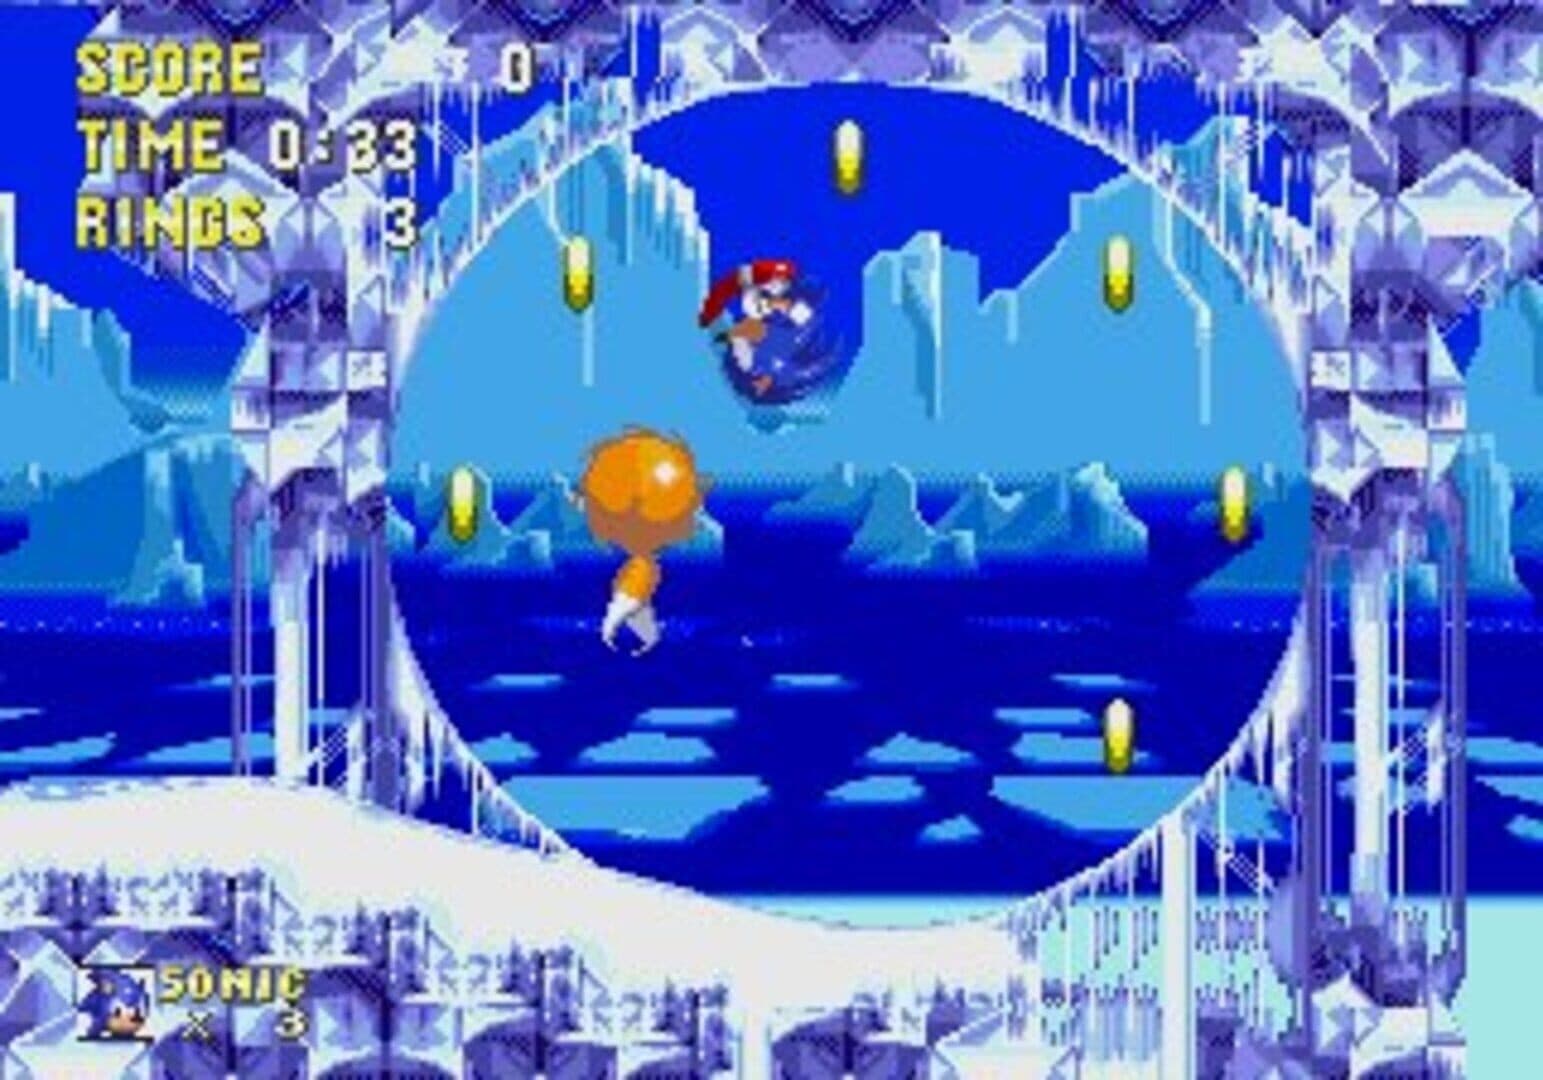 Sonic the Hedgehog 3 Image